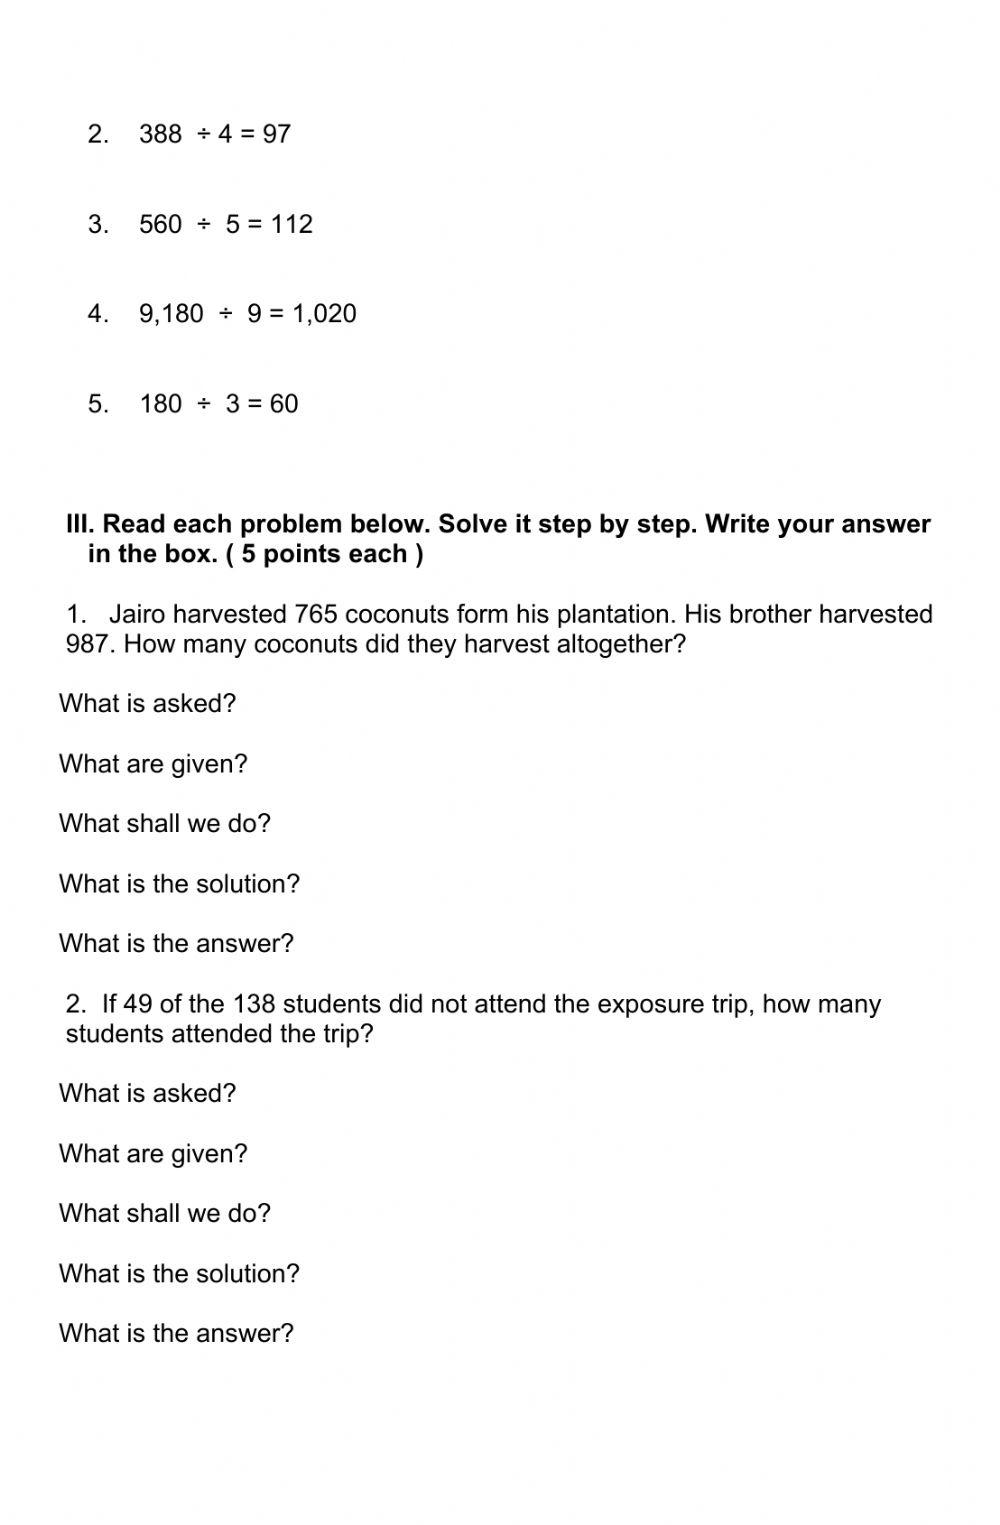 1st Quarter - Quiz no.2 in Math 4